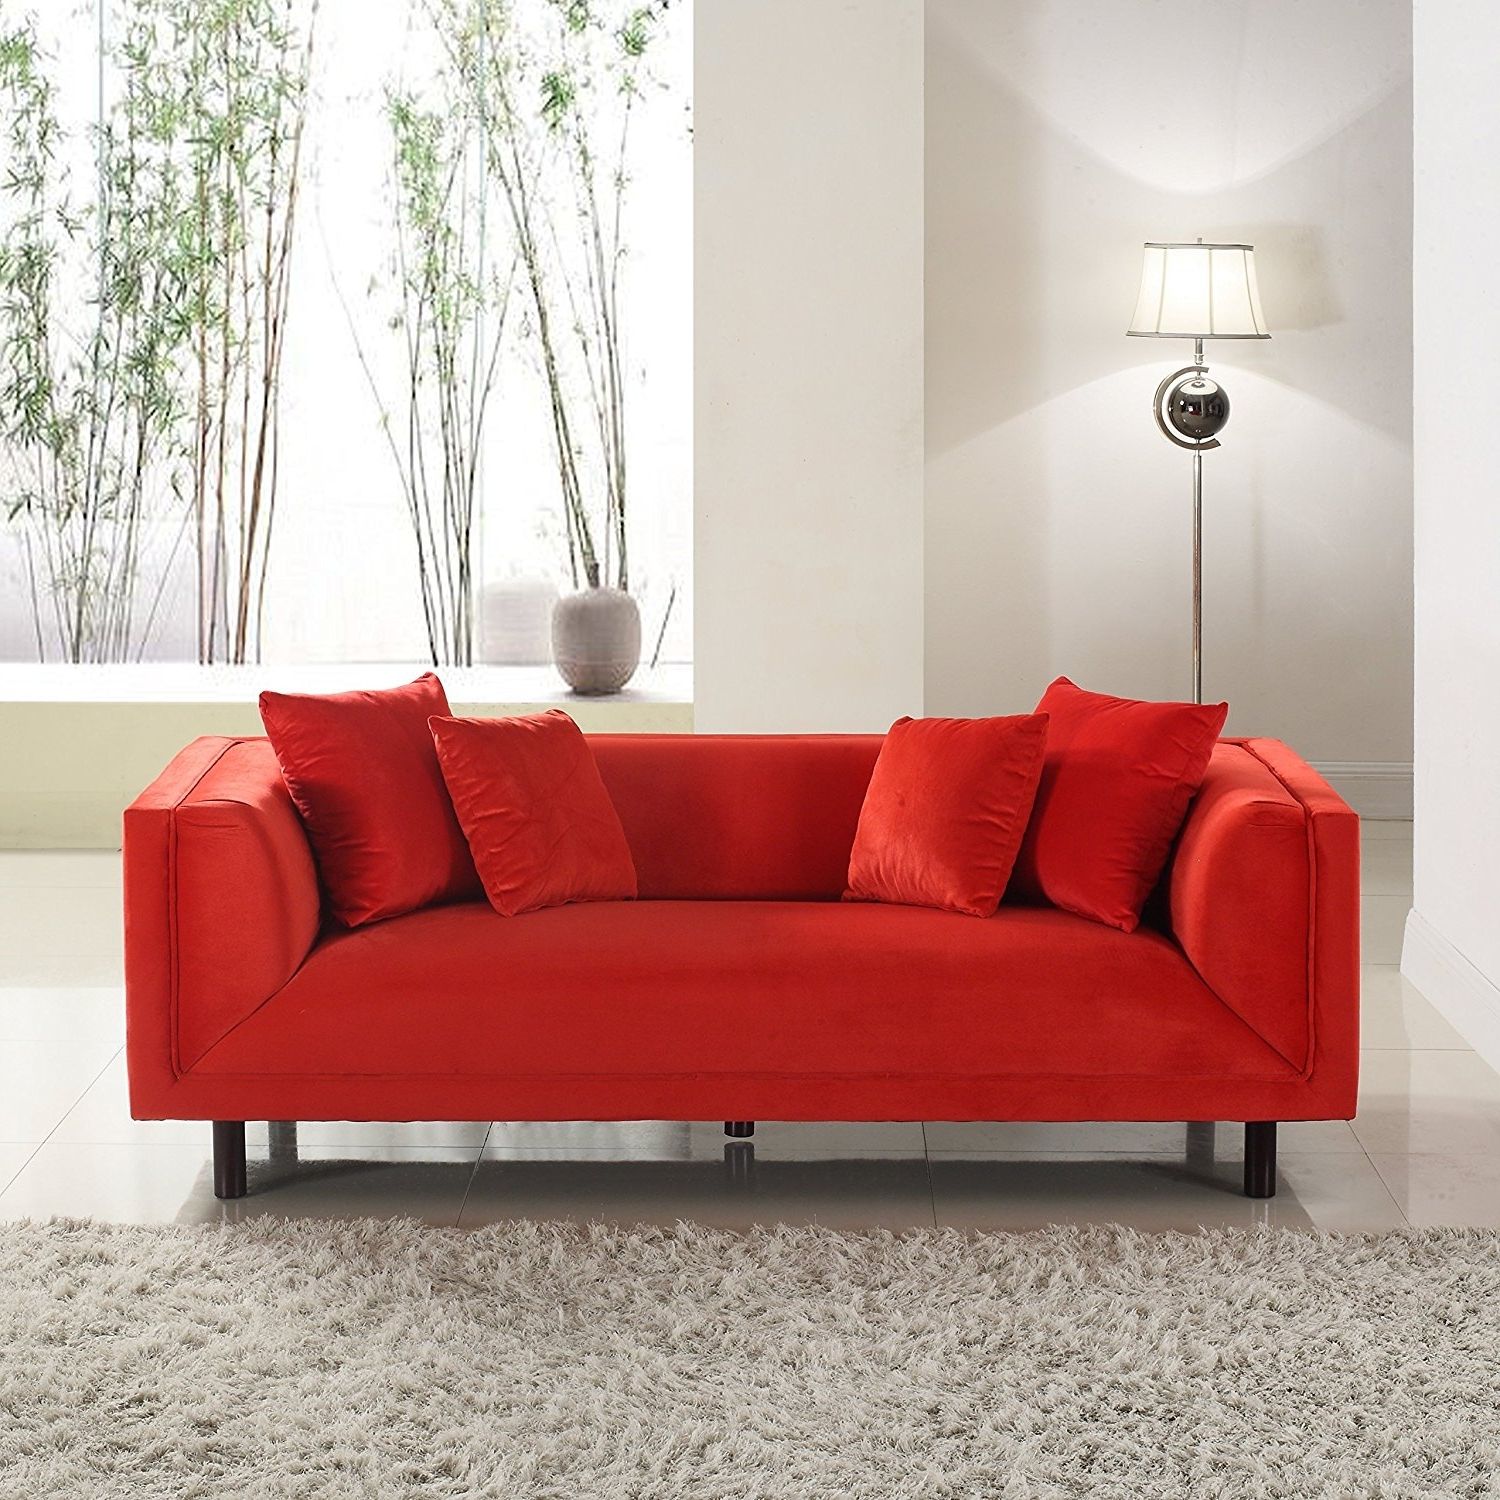 Popular Modern 3 Seater Sofas For Amazon: Mid Century Classic Velvet 3 Seater Sofa – Black, Grey (View 15 of 15)